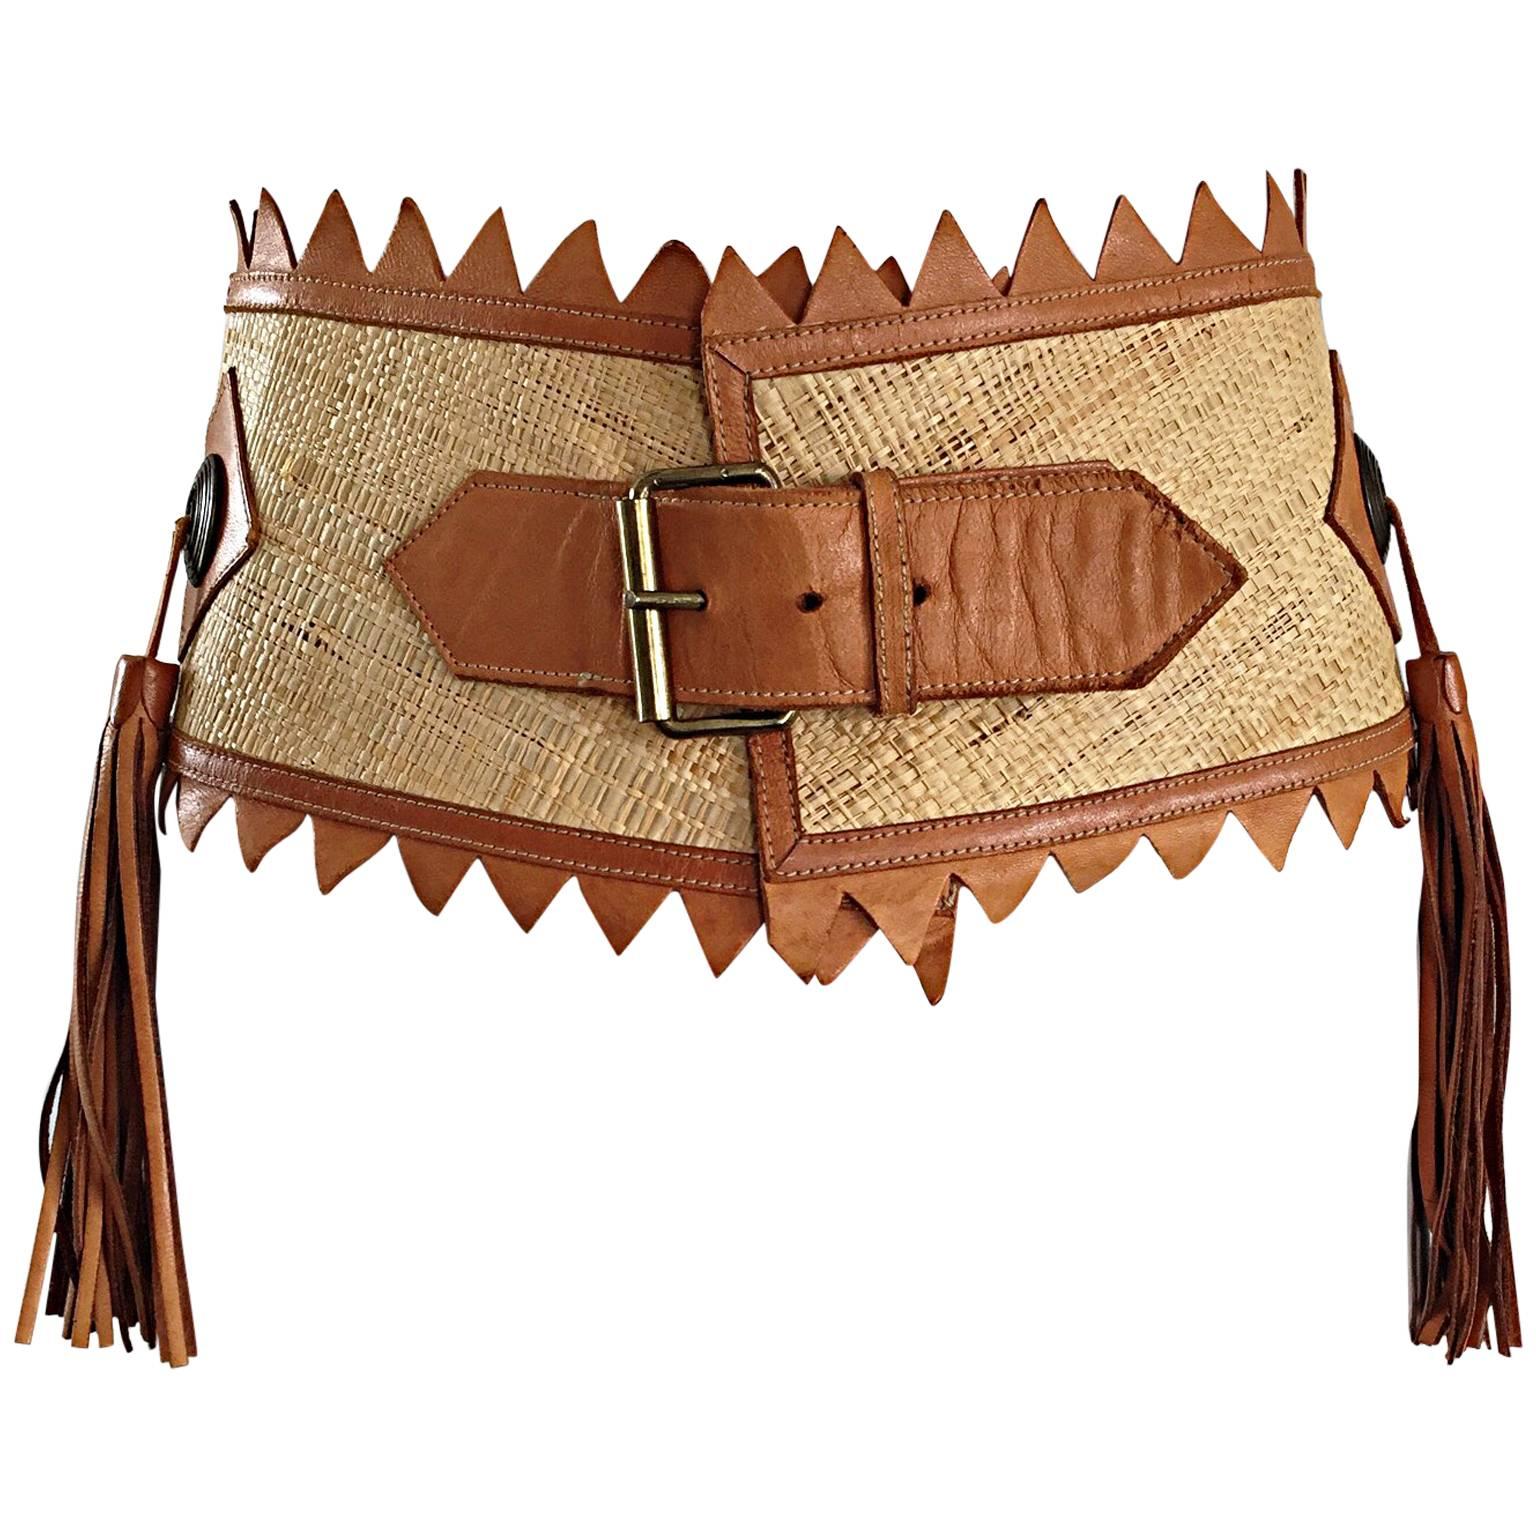 Chic 1970s Tan Saddle Leather and Straw 70s Boho Belt w/ Leather Fringe Tassels 